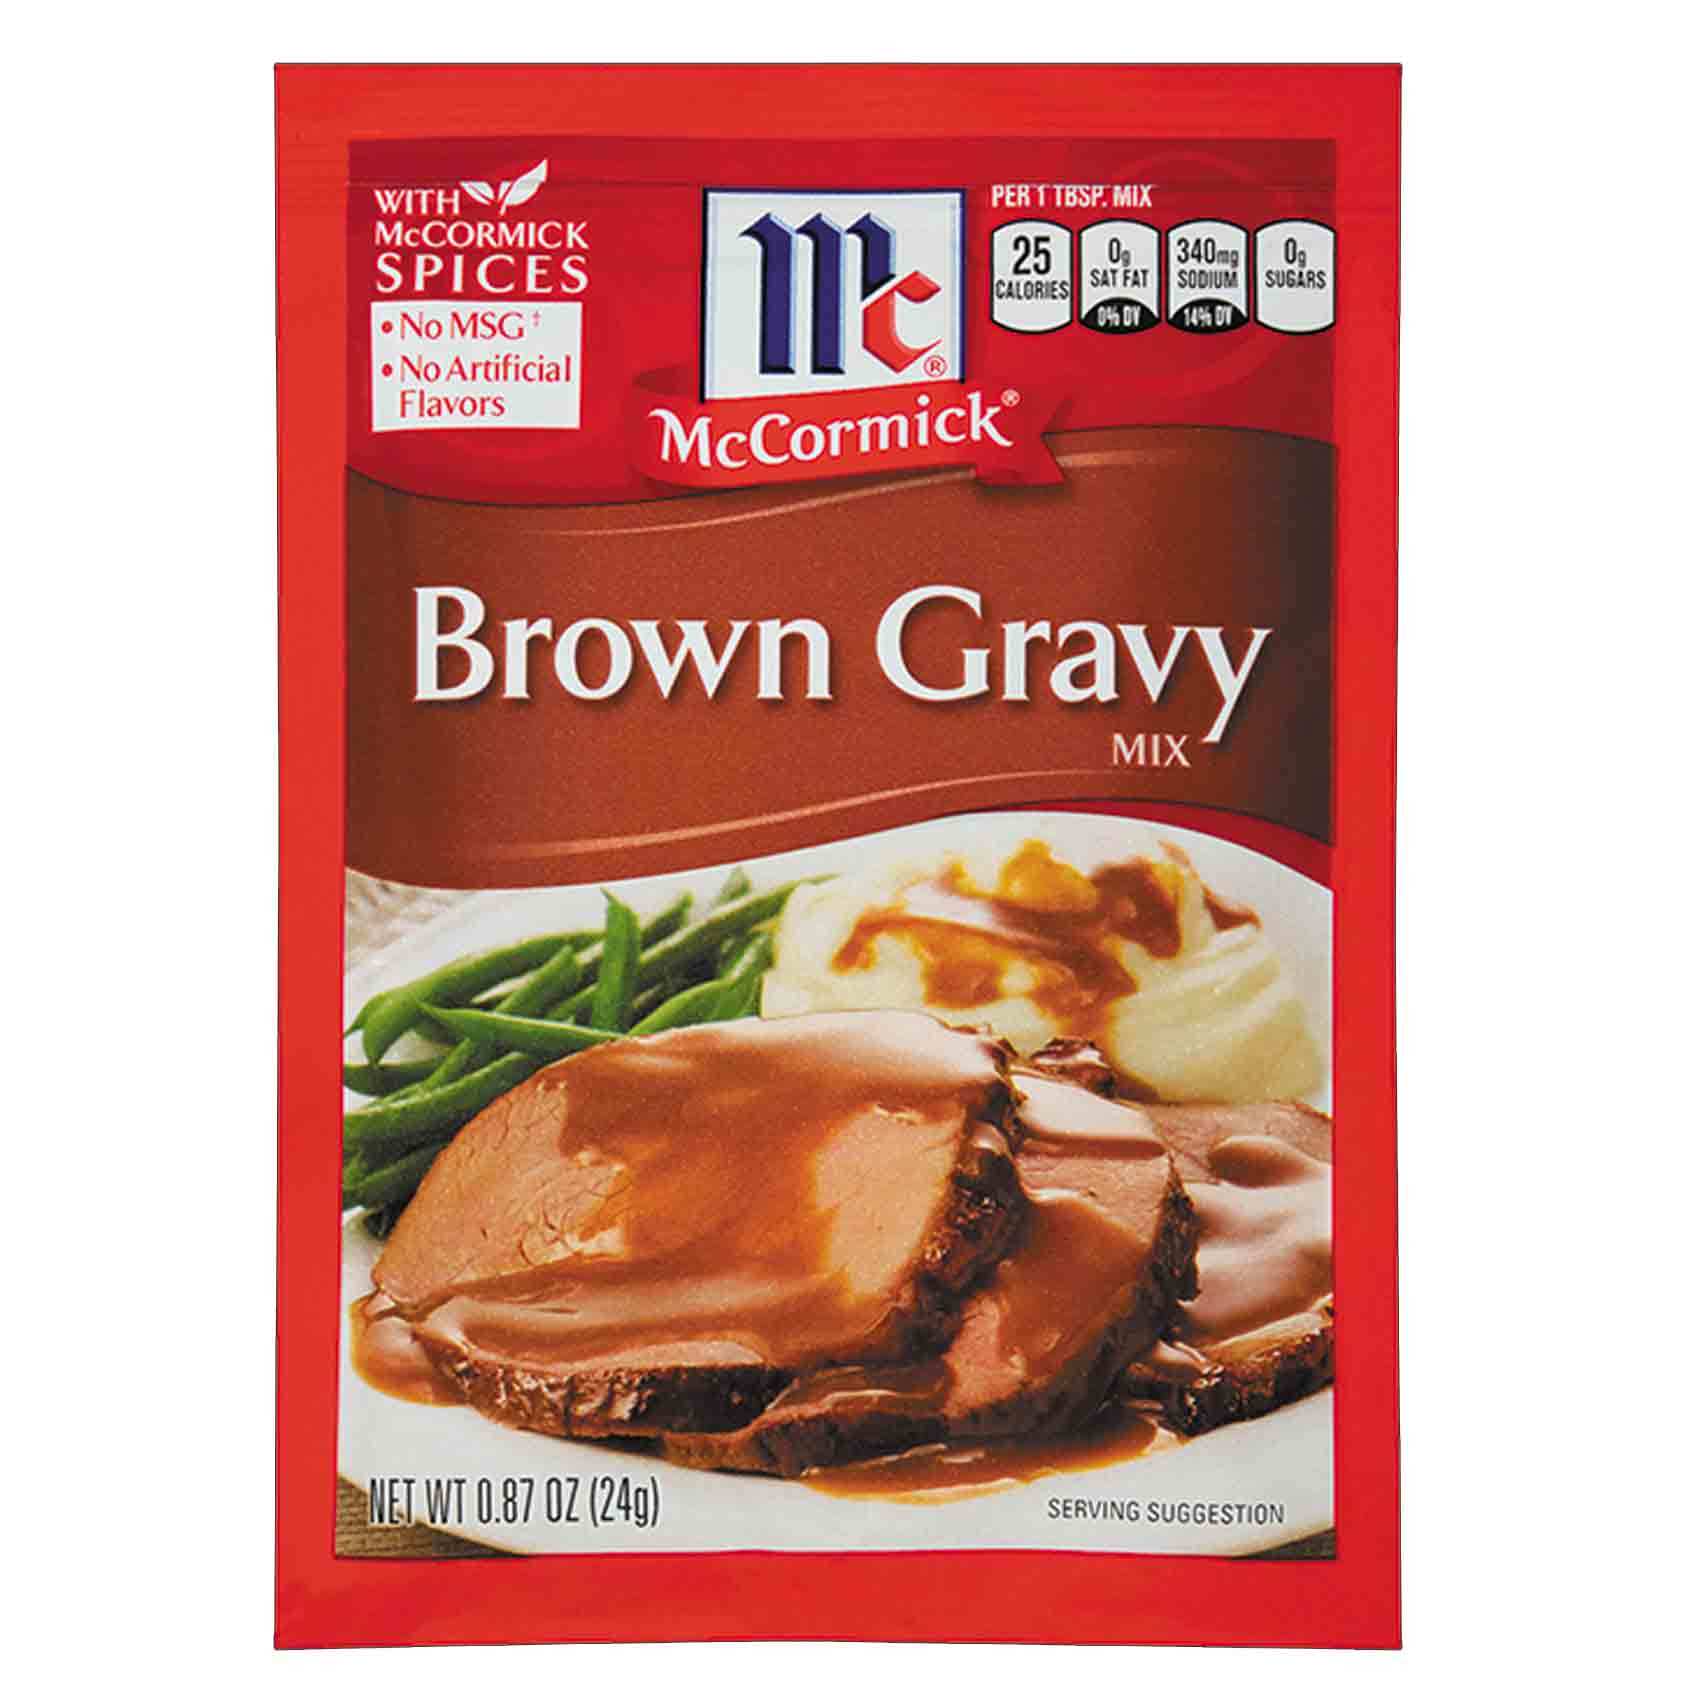 Mccormick Brown Gravy Recipes - Mccormick Brown Gravy Mix Review - Pineapple brown sugar glaze for ham.